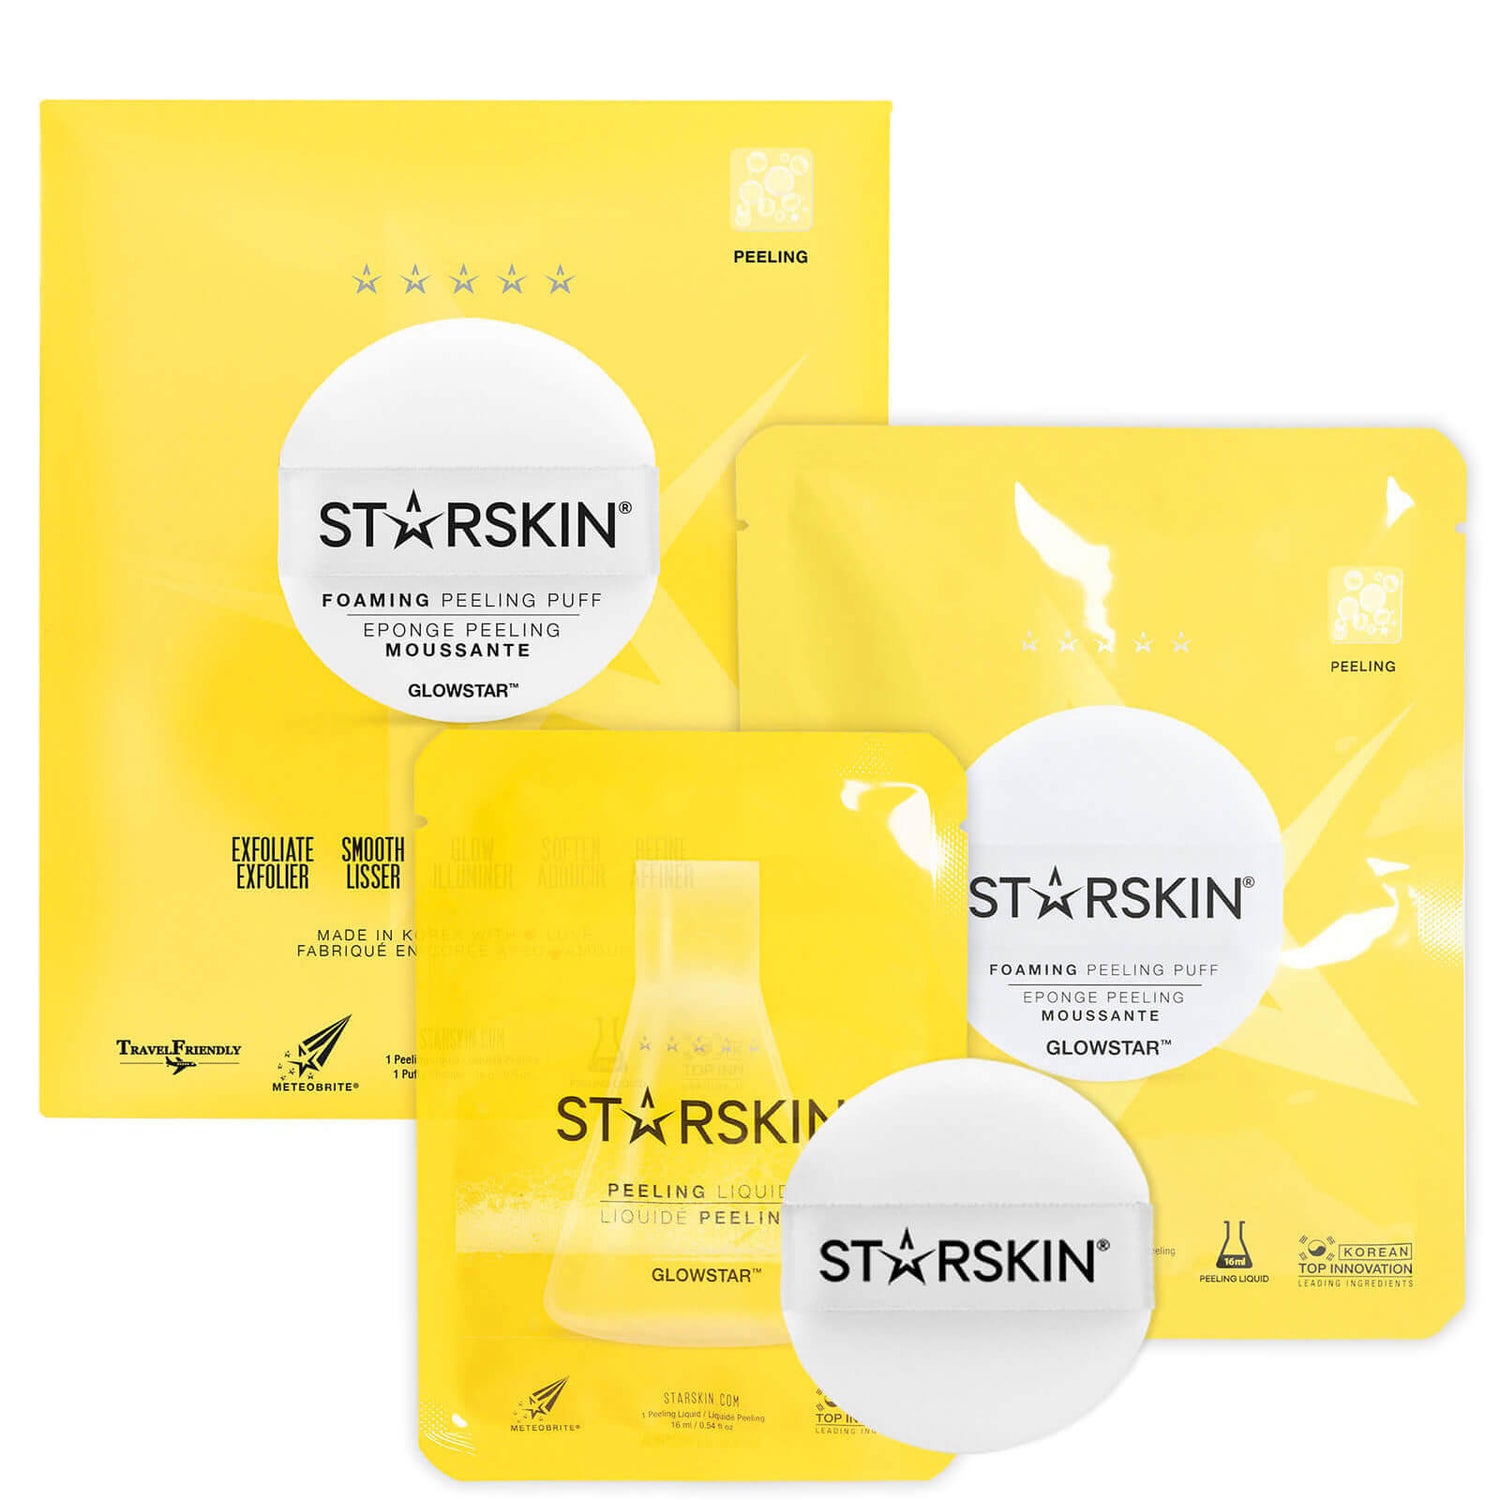 STARSKIN Glowstar™ spugnetta imbevuta esfoliante pelle perfetta